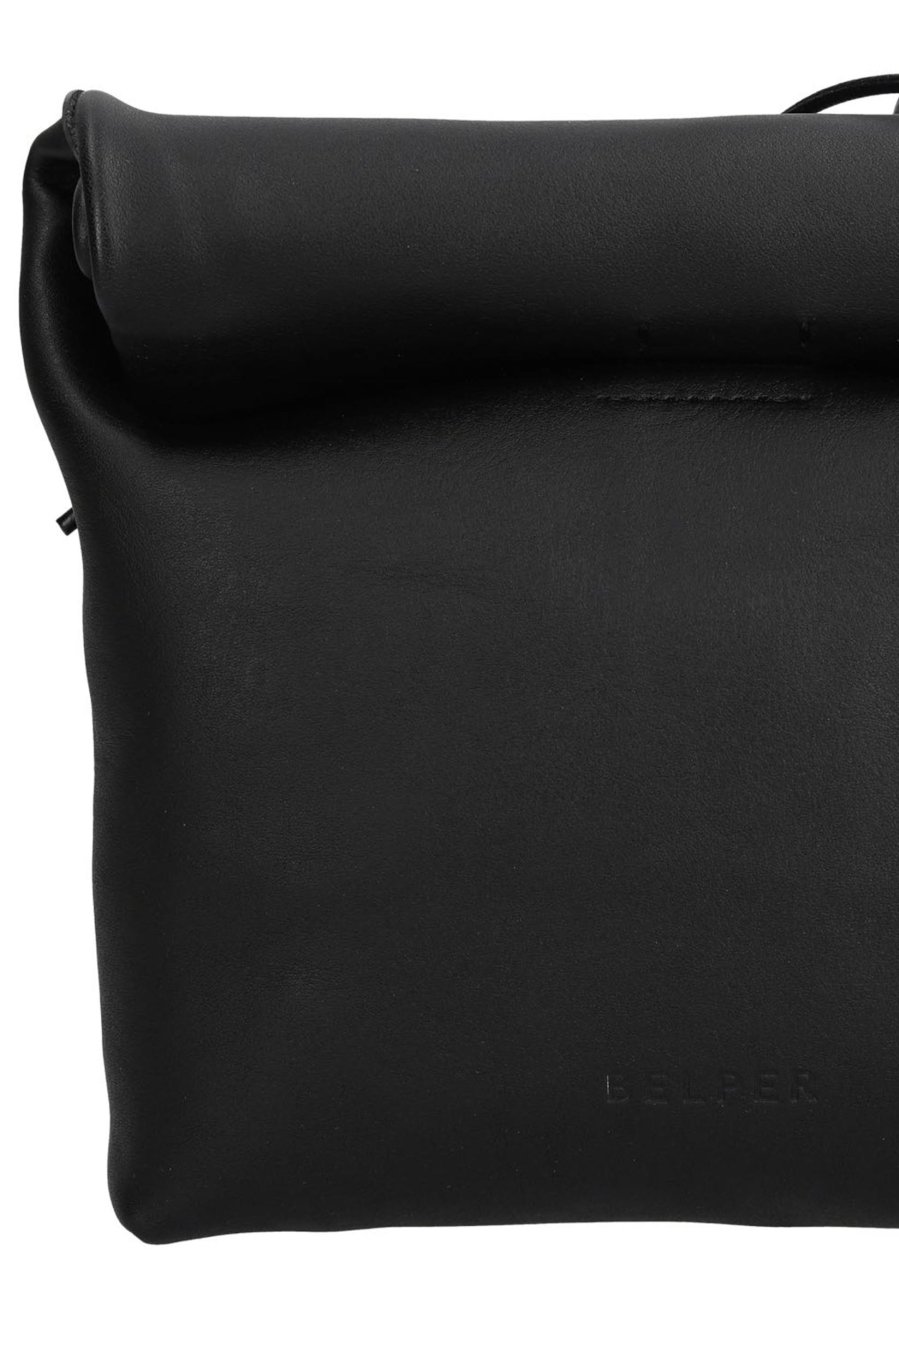 belper ベルパー WALK AROUND BAG ブラック　黒　black保存袋とセットでの出品です